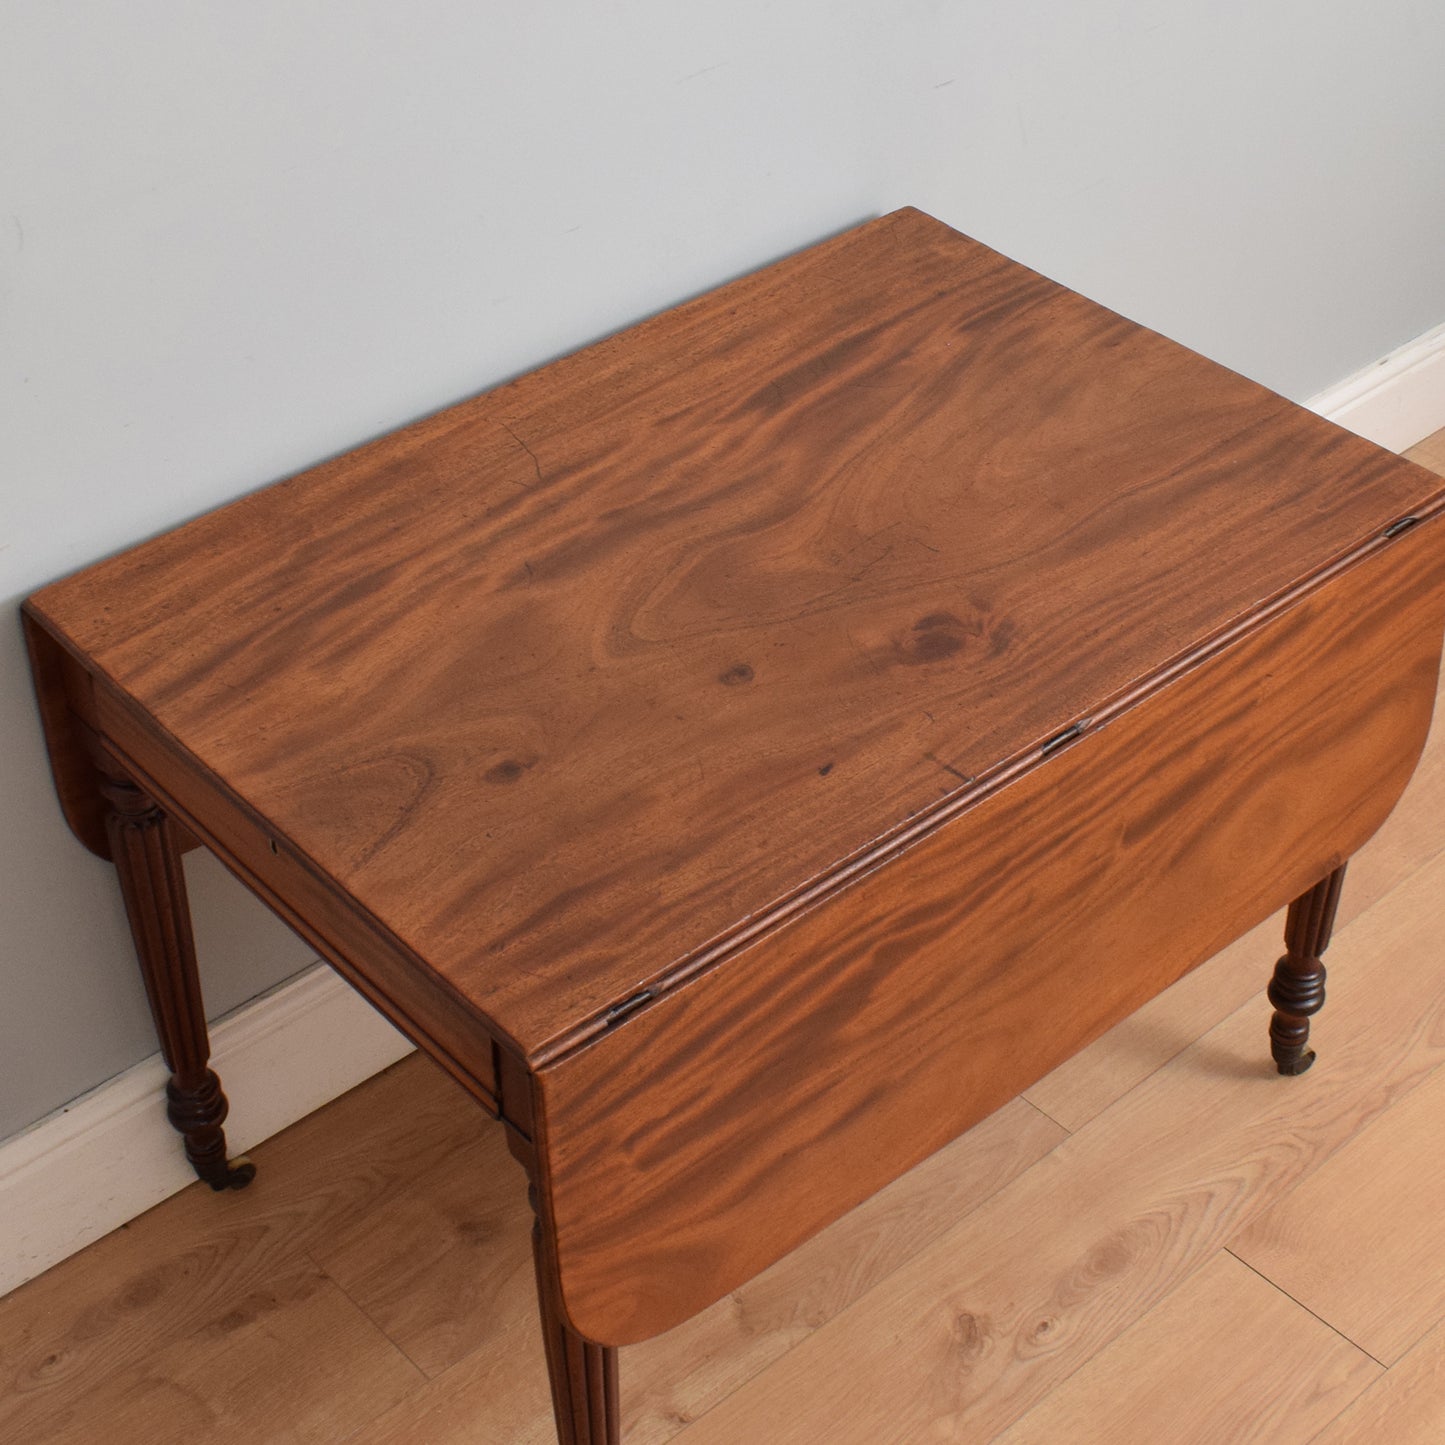 Restored Mahogany Drop-Leaf Table